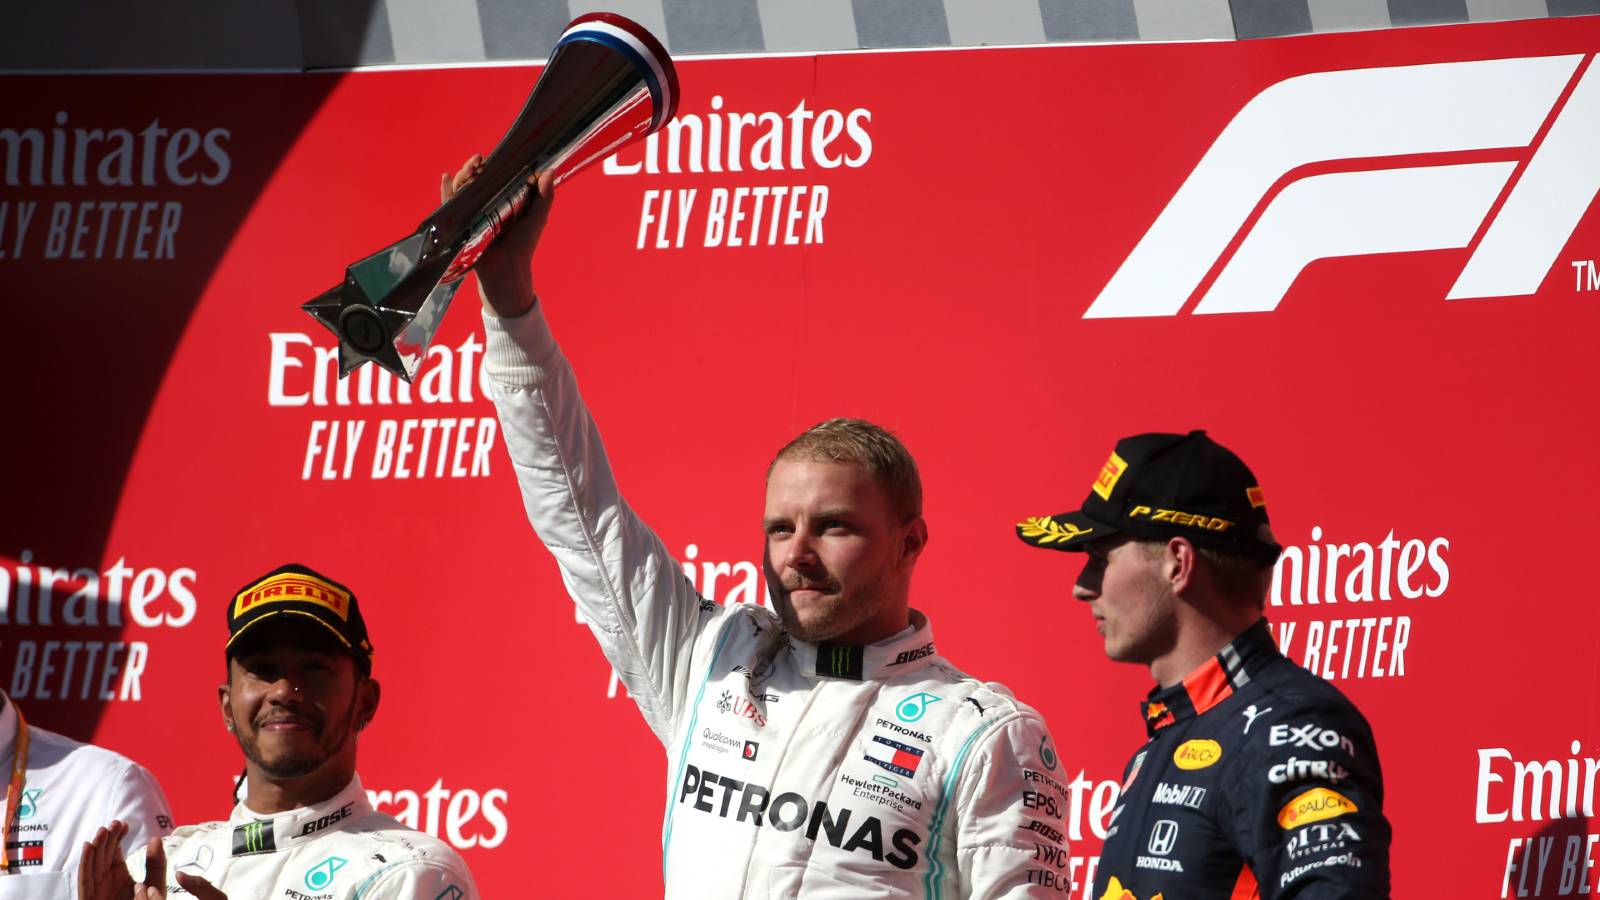 Valtteri Bottas celebrates a victory on the podium.